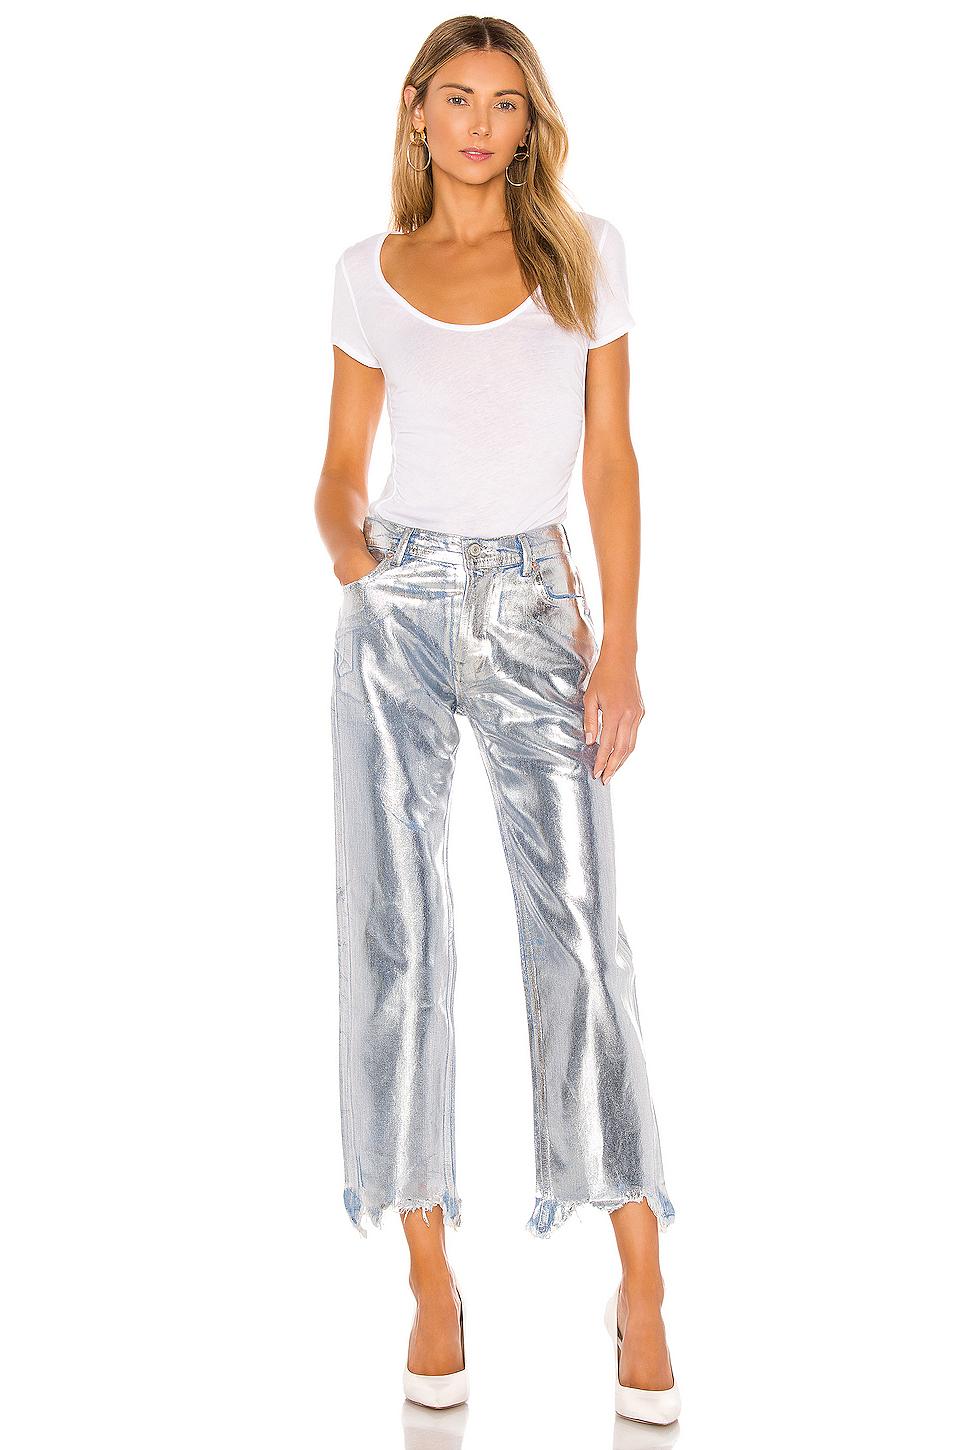 Free People Cotton Maggie Foil Jean in Silver (Metallic) - Lyst